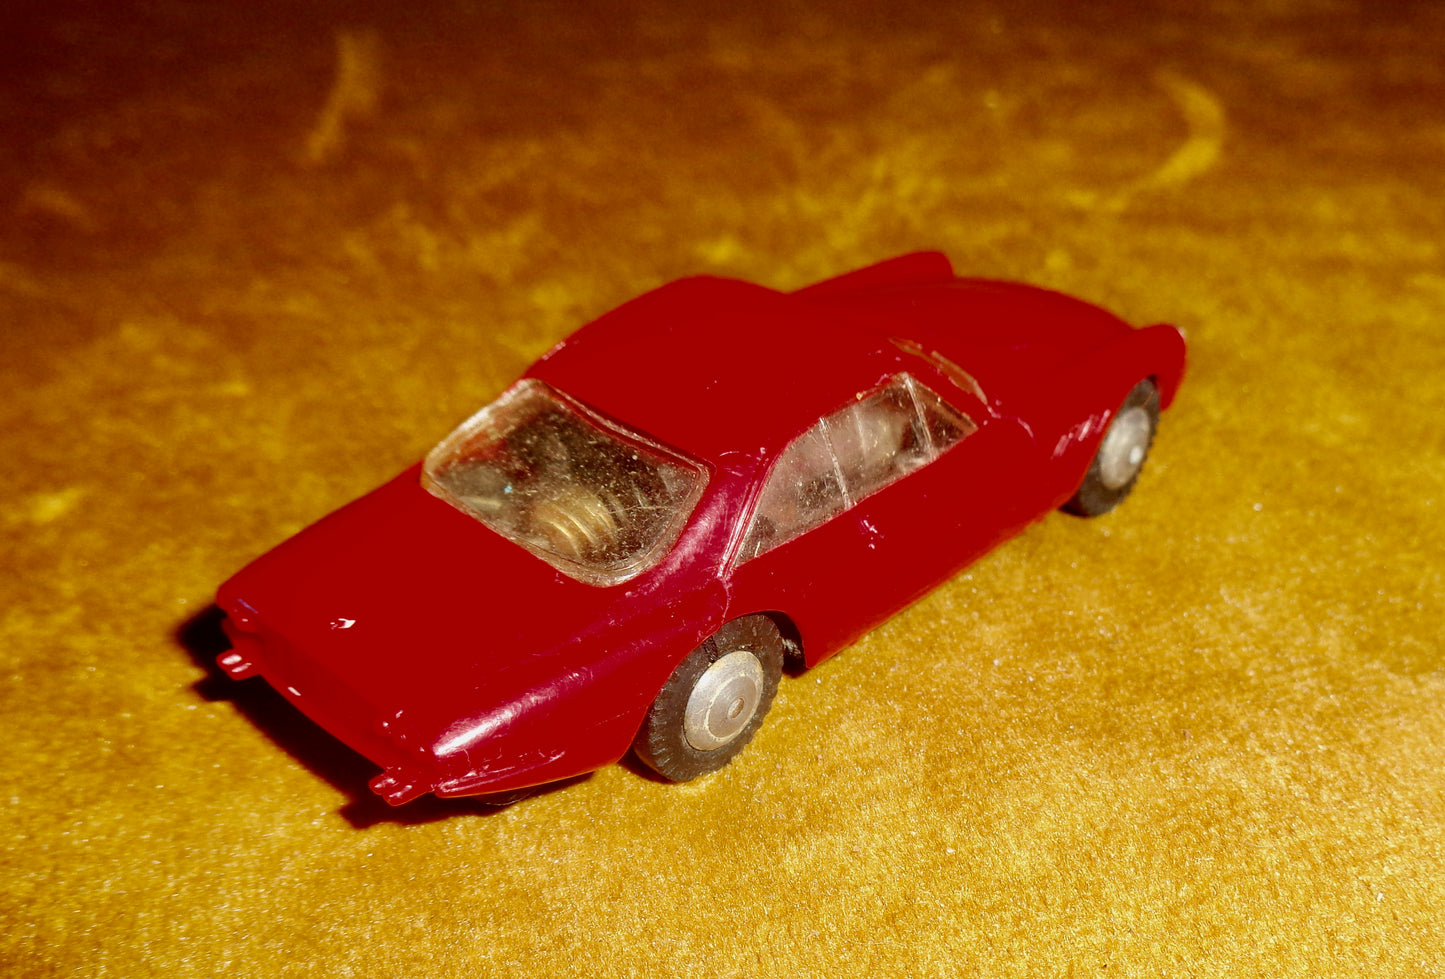 1960s Minic Motorways Ferrari 500 Superfast M1576 Red Racing Sports Car